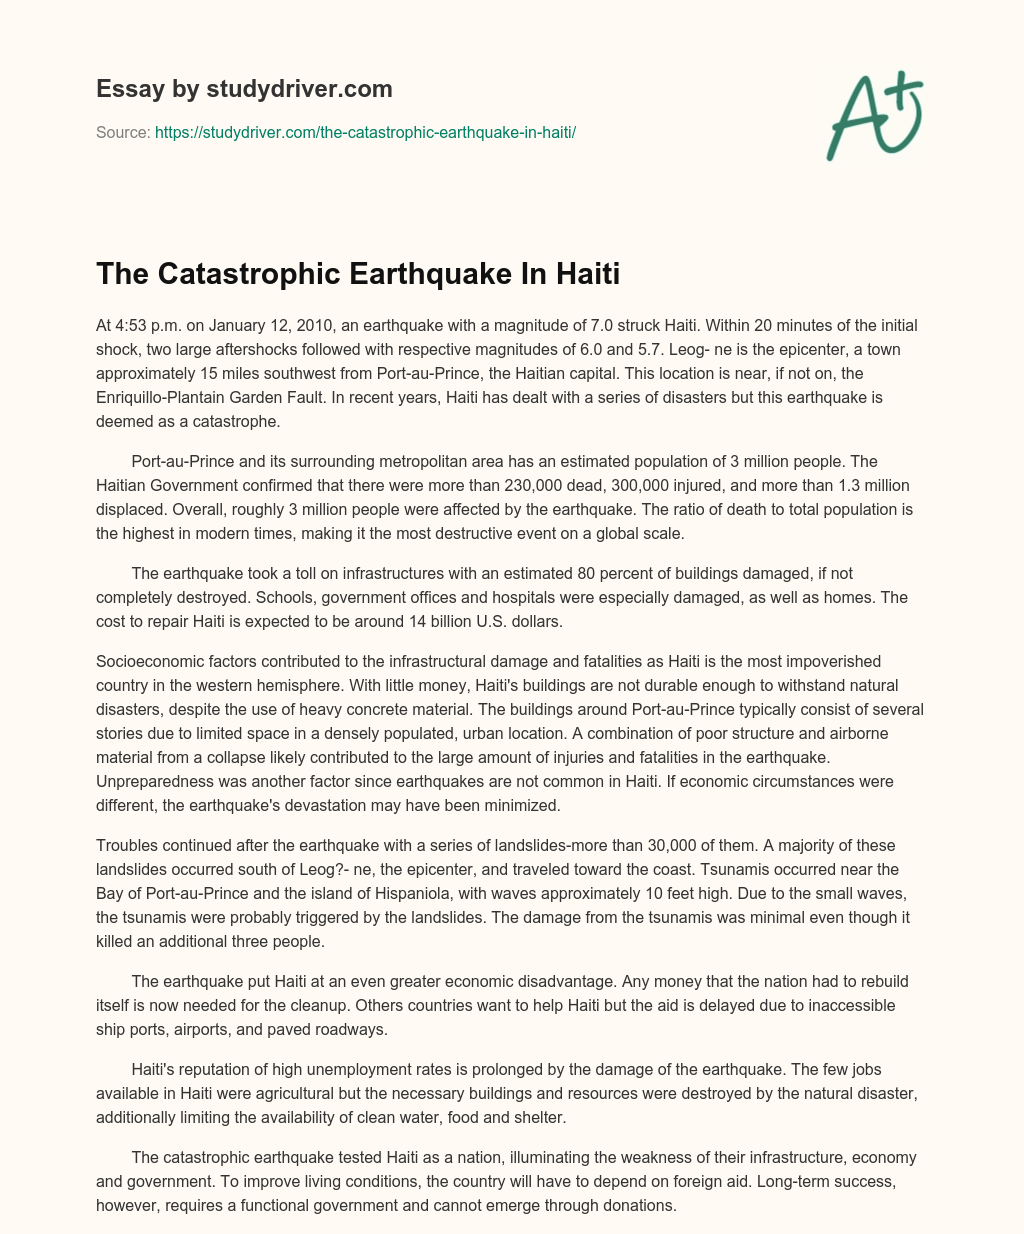 The Catastrophic Earthquake in Haiti essay